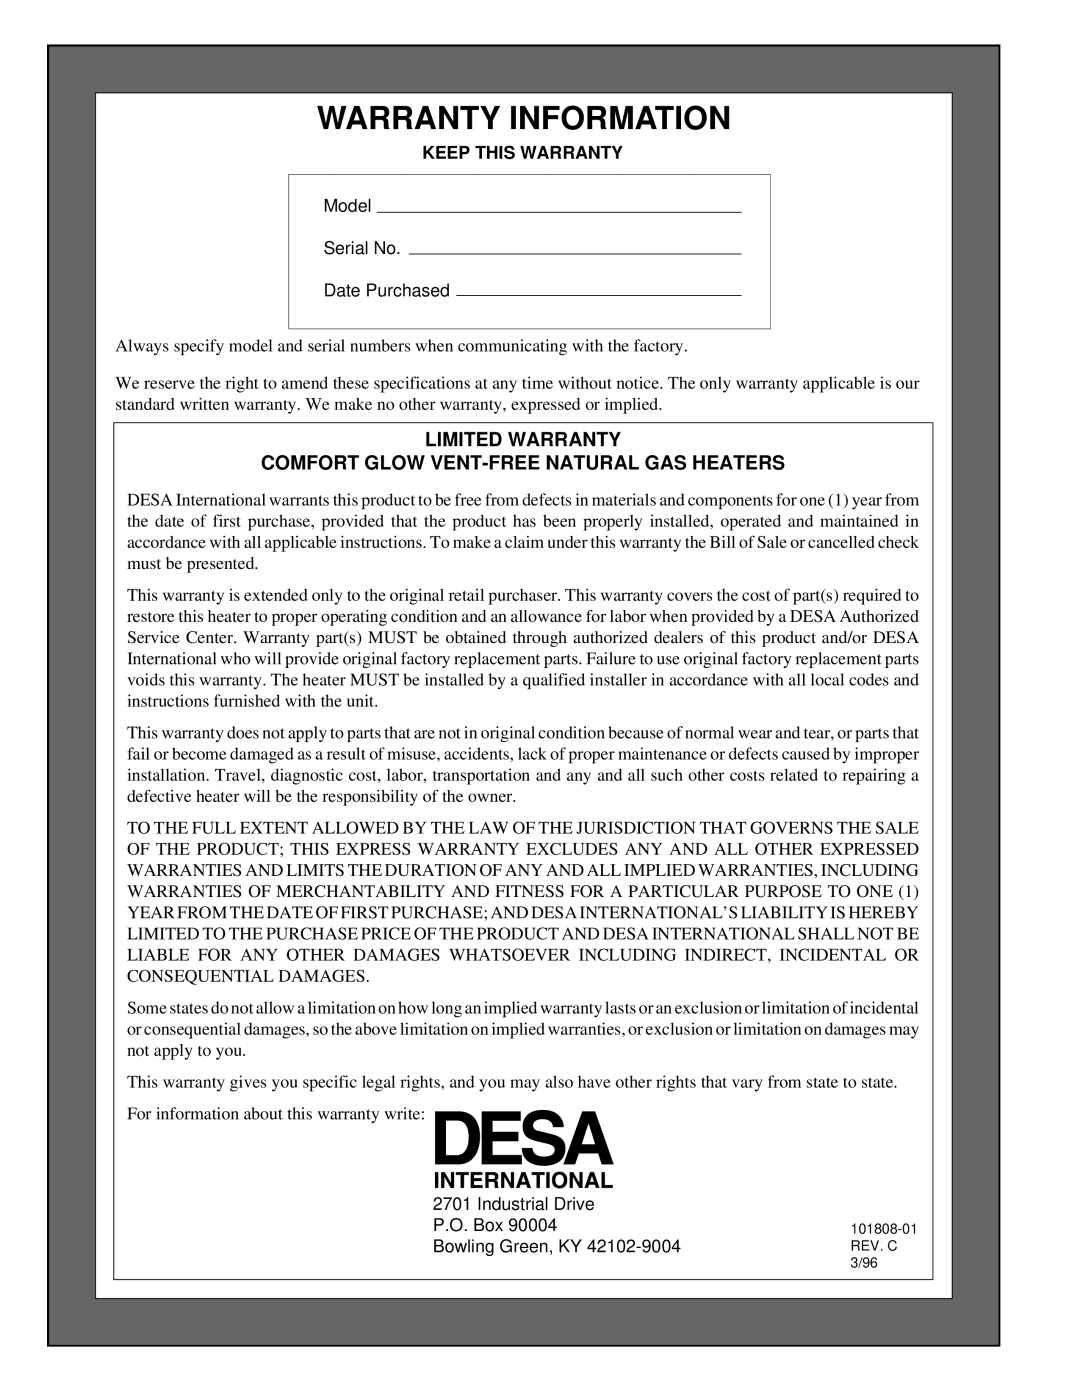 Desa Tech 28, 18, B Warranty Information, Limited Warranty Comfort Glow Vent-Free Natural Gas Heaters, Keep This Warranty 